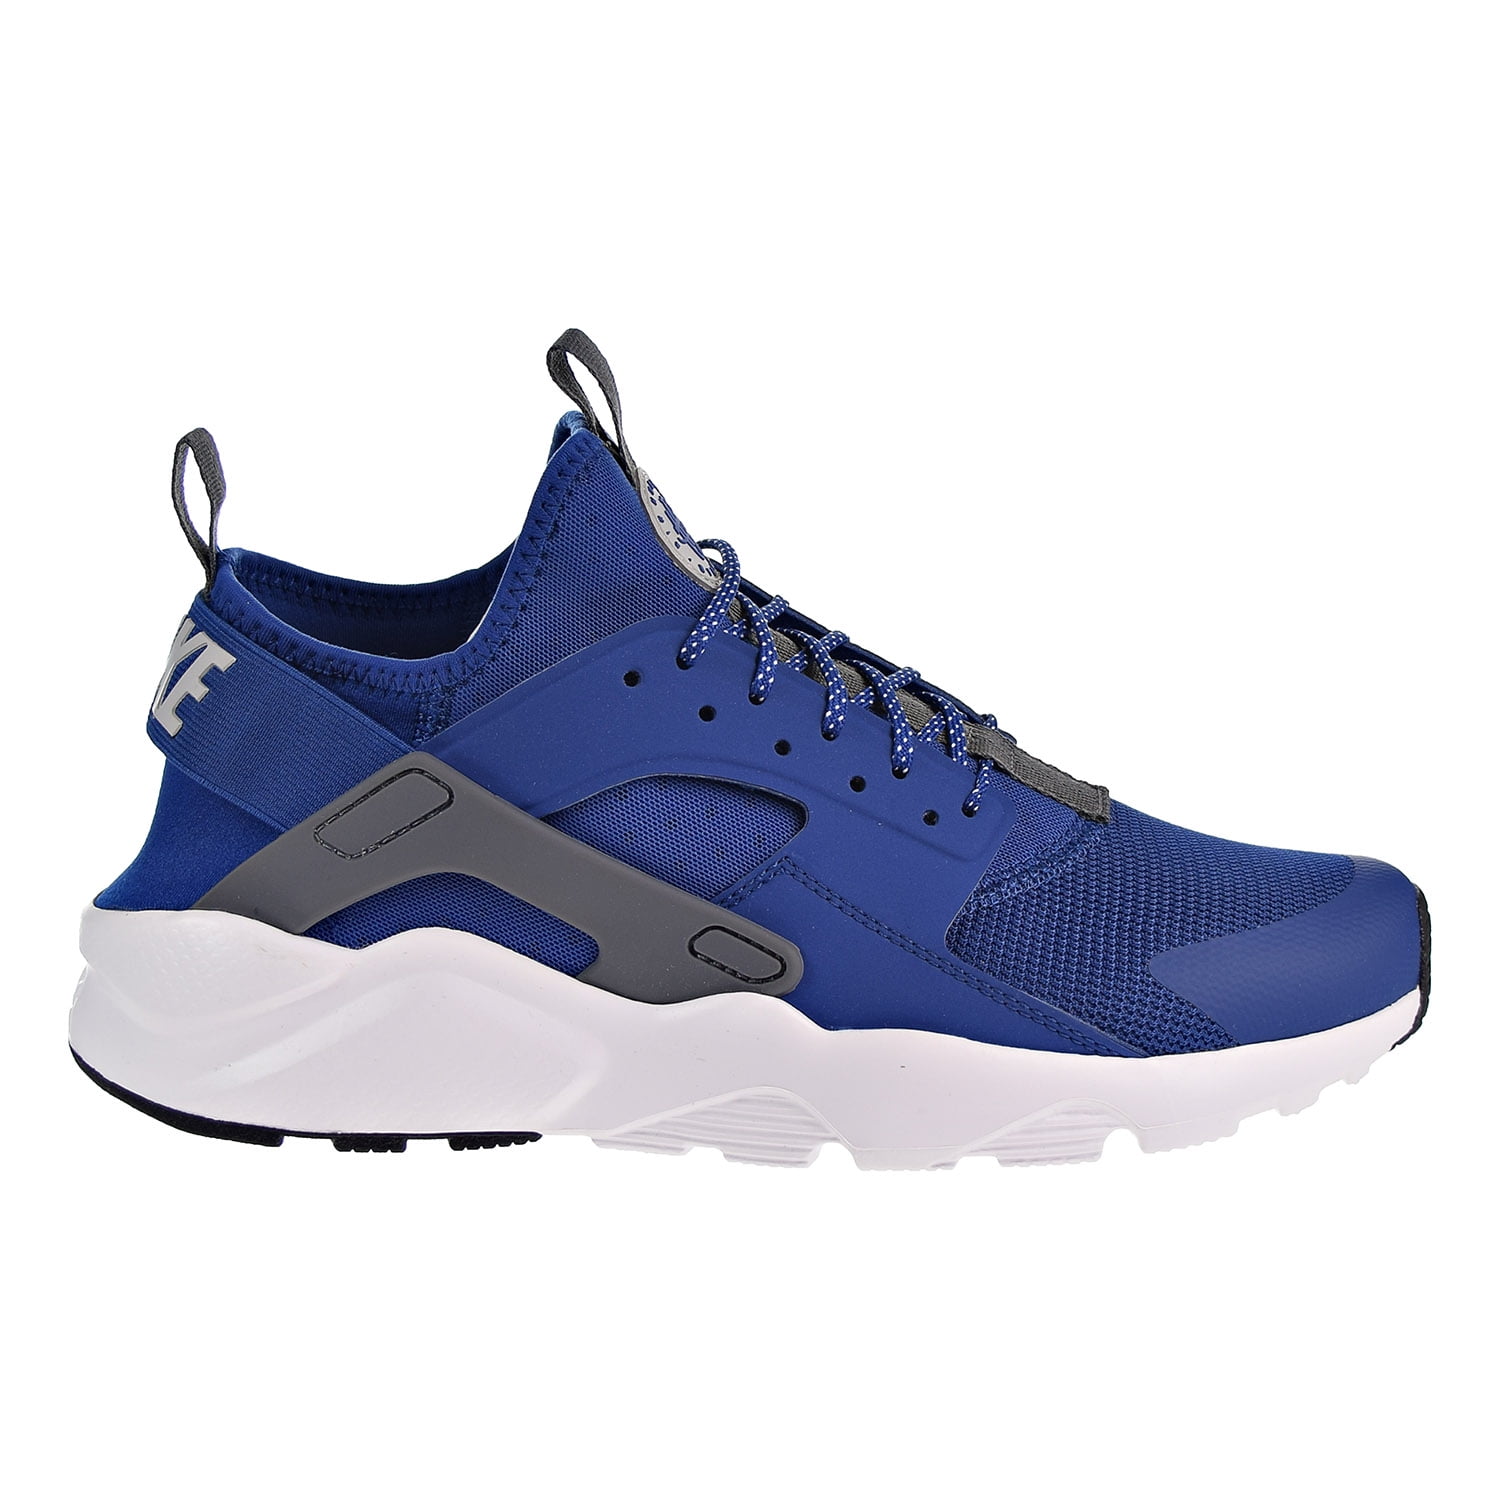 Pasen musical dennenboom Nike Air Huarache Run Ultra Men's Running Shoes Gym Blue/Wolf Grey-White  819685-411 - Walmart.com